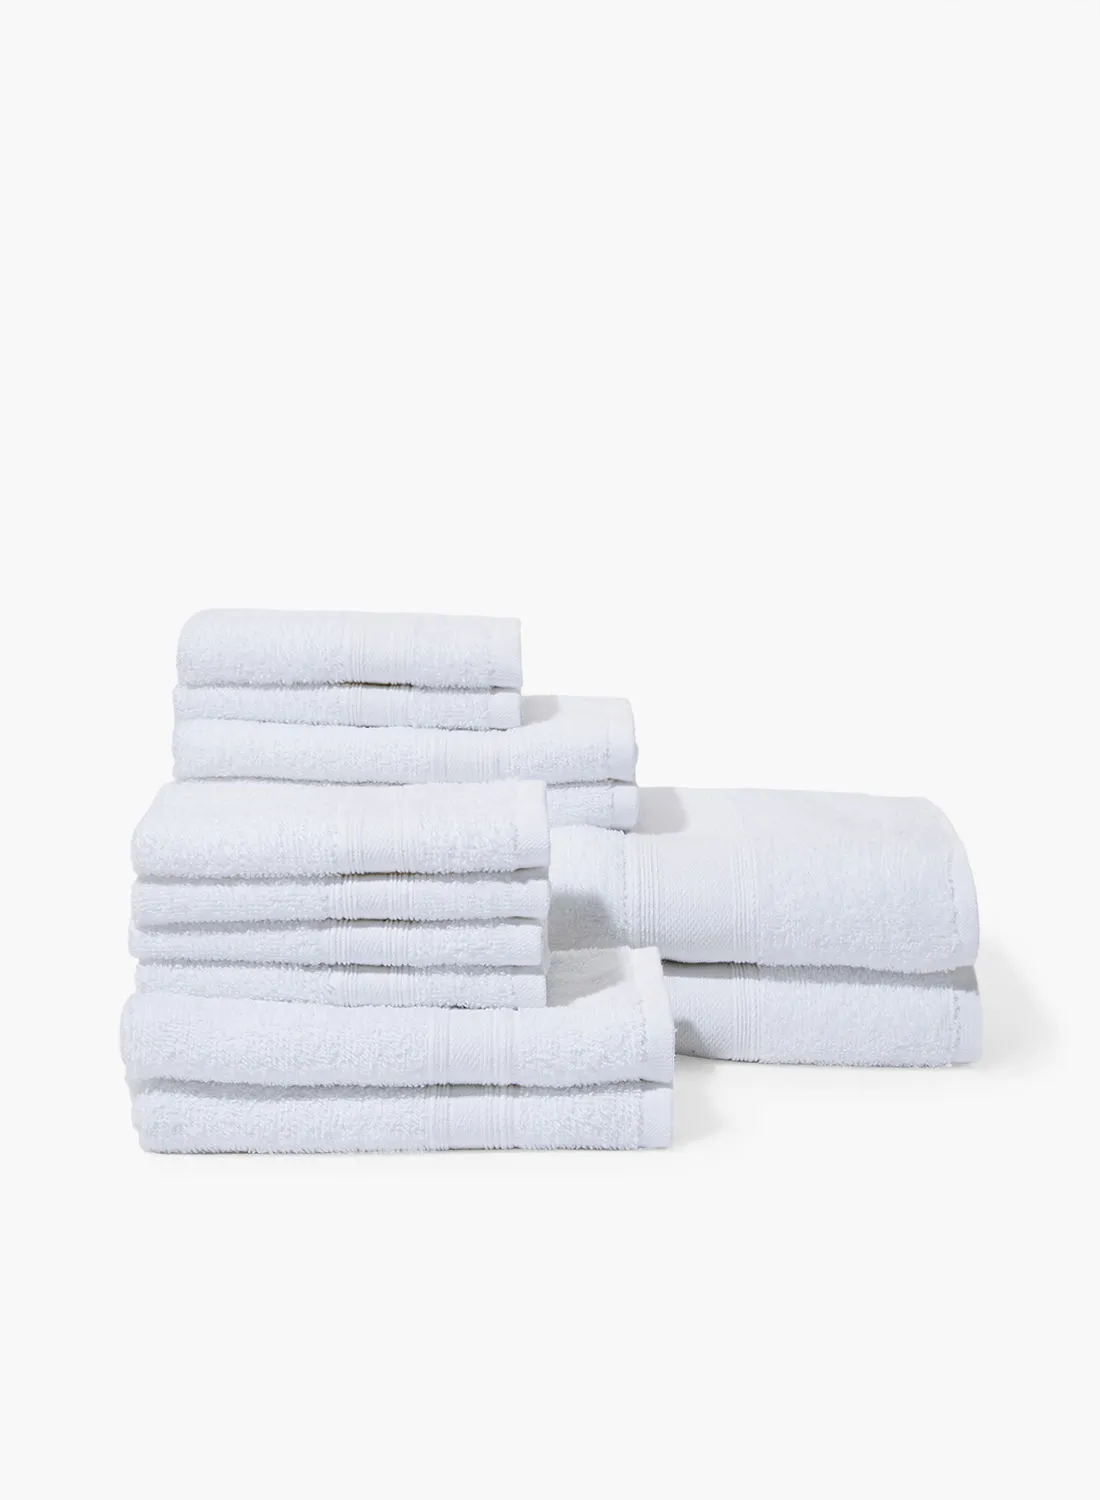 Amal 12 Piece Bathroom Towel Set - 400 GSM 100% Cotton Terry - 12 Face Towel - White Color -Quick Dry - Super Absorbent